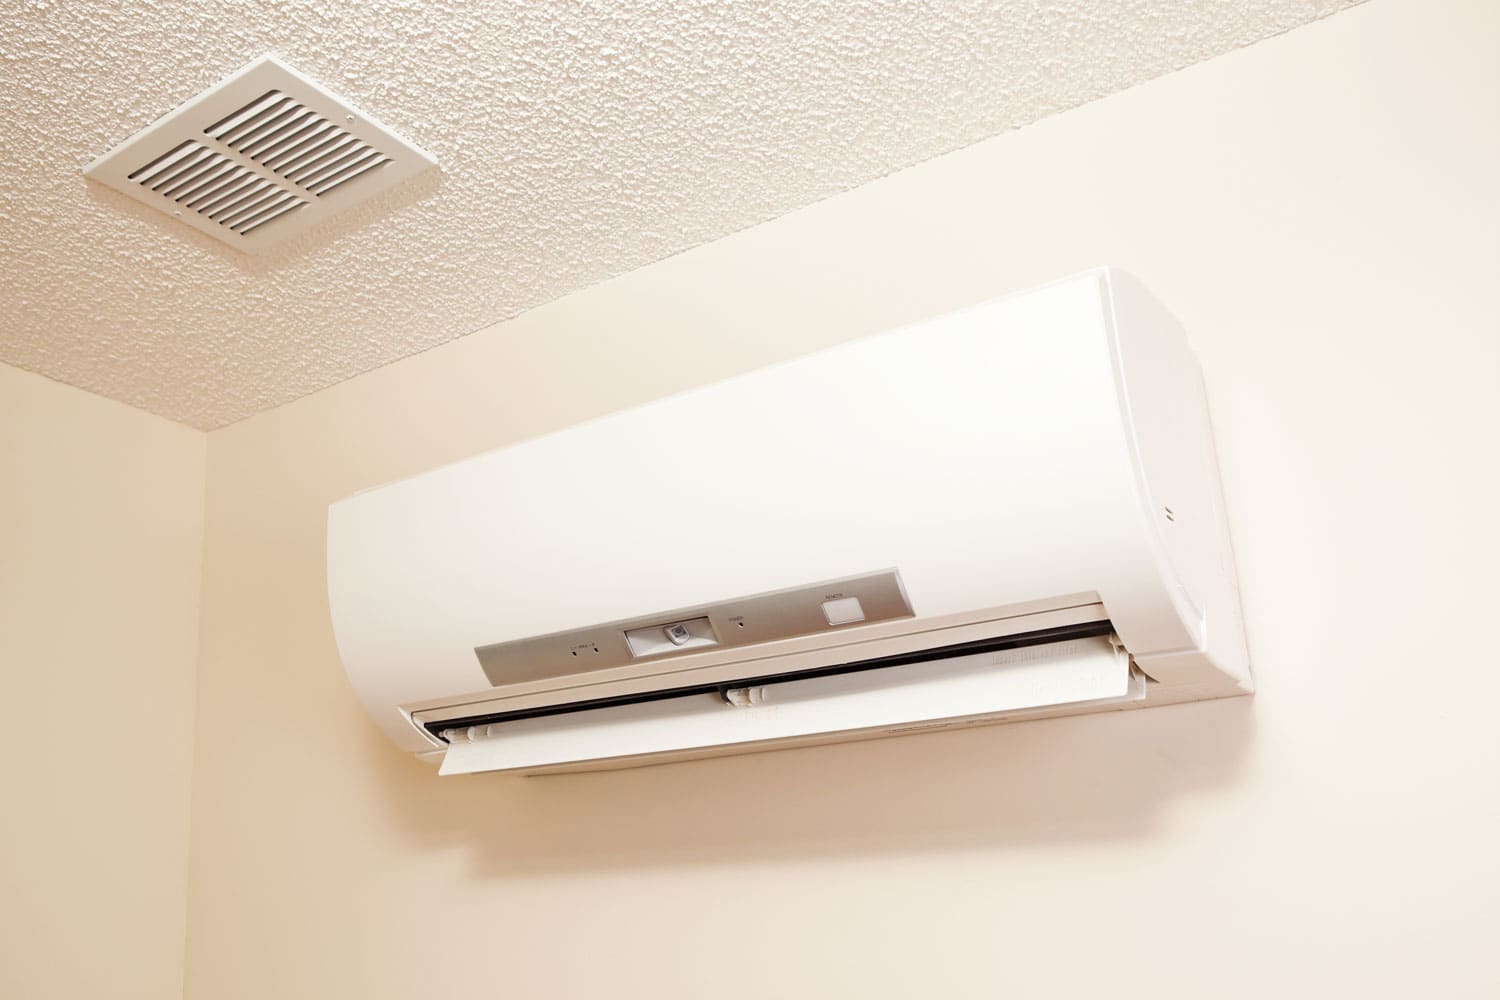 A mini split air conditioning unit